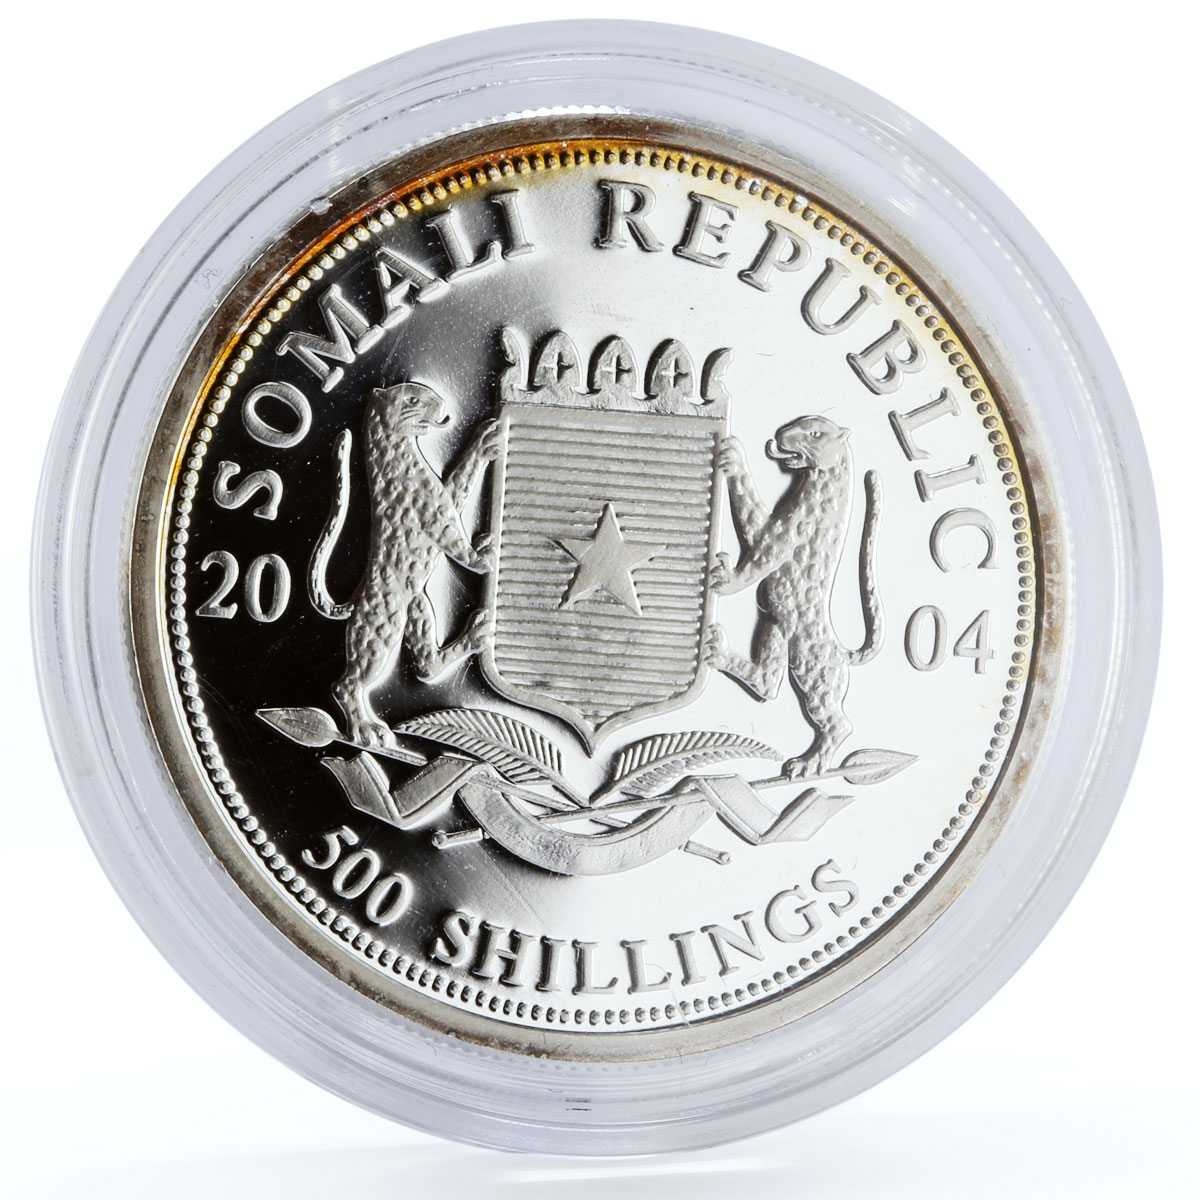 Somalia 500 shillings African Wildlife Elephant Fauna silver coin 2004